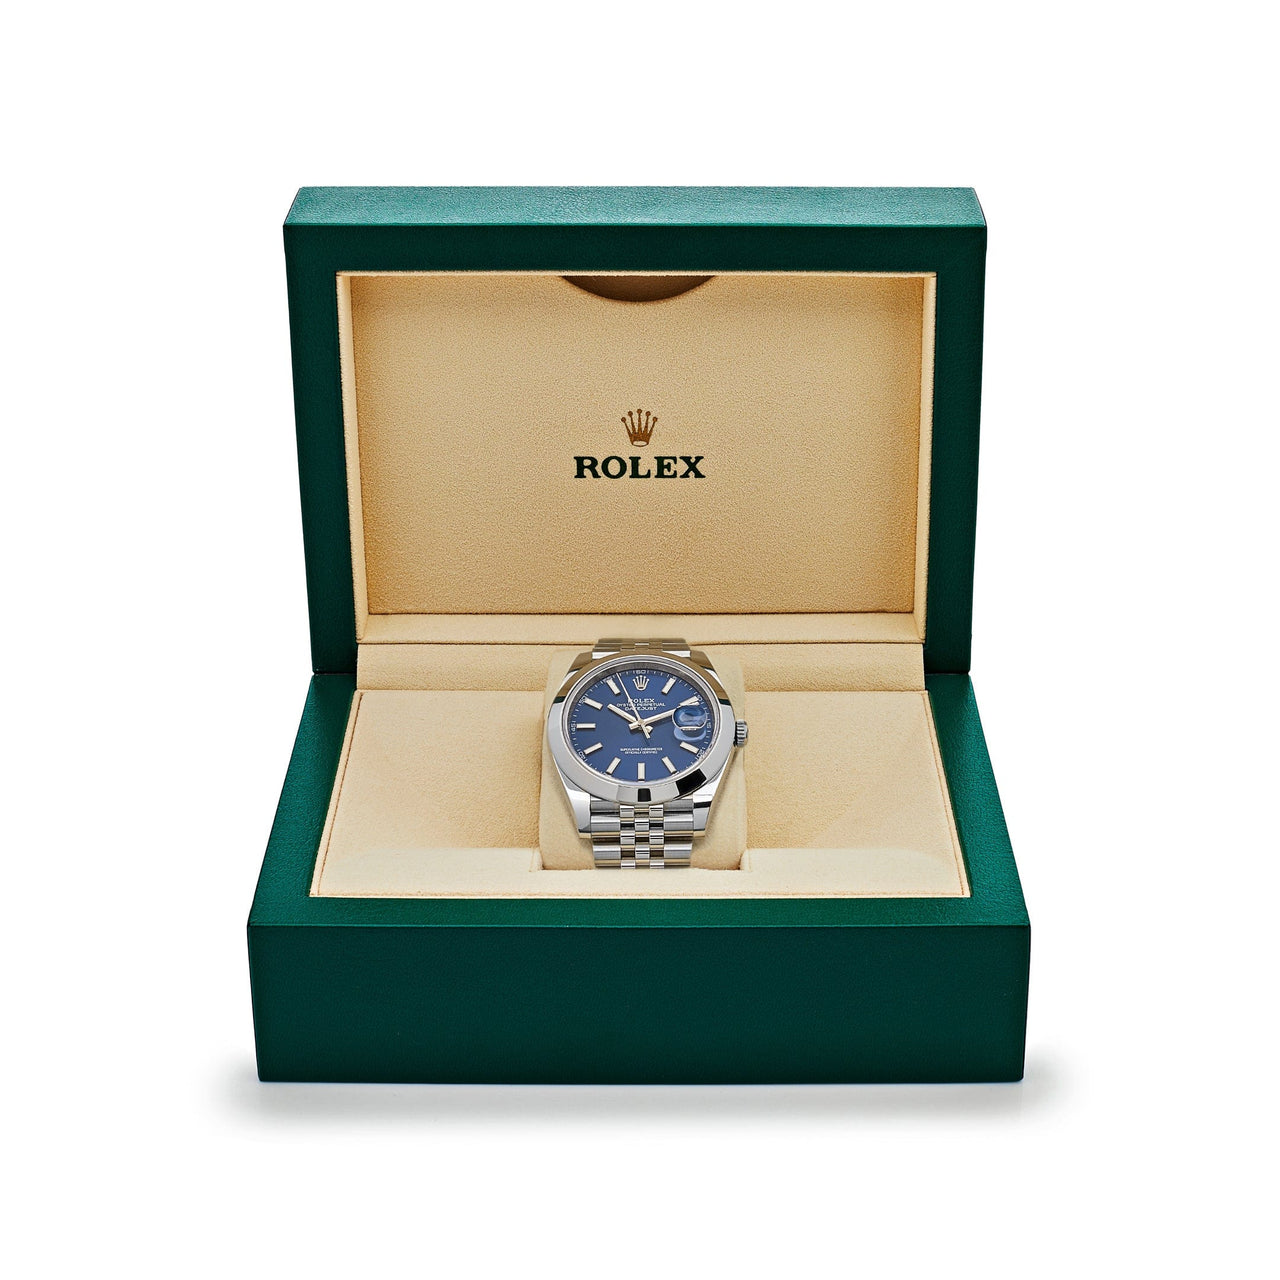 Luxury Watch Rolex Datejust 41 Stainless Steel Blue Dial Jubilee 126300 Wrist Aficionado